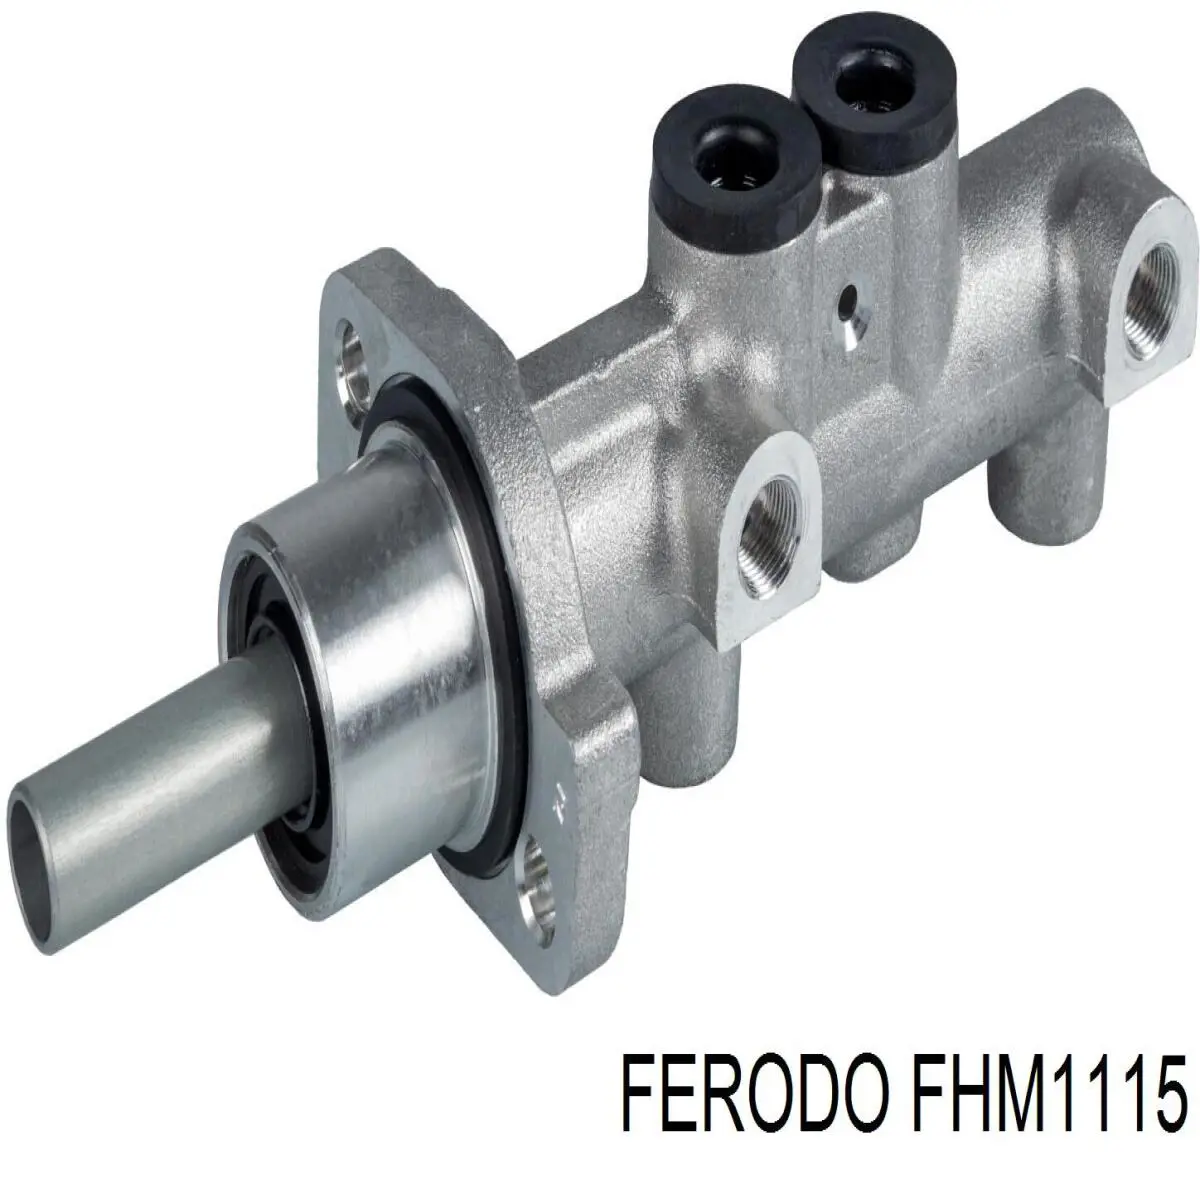 FHM1115 Ferodo цилиндр тормозной главный